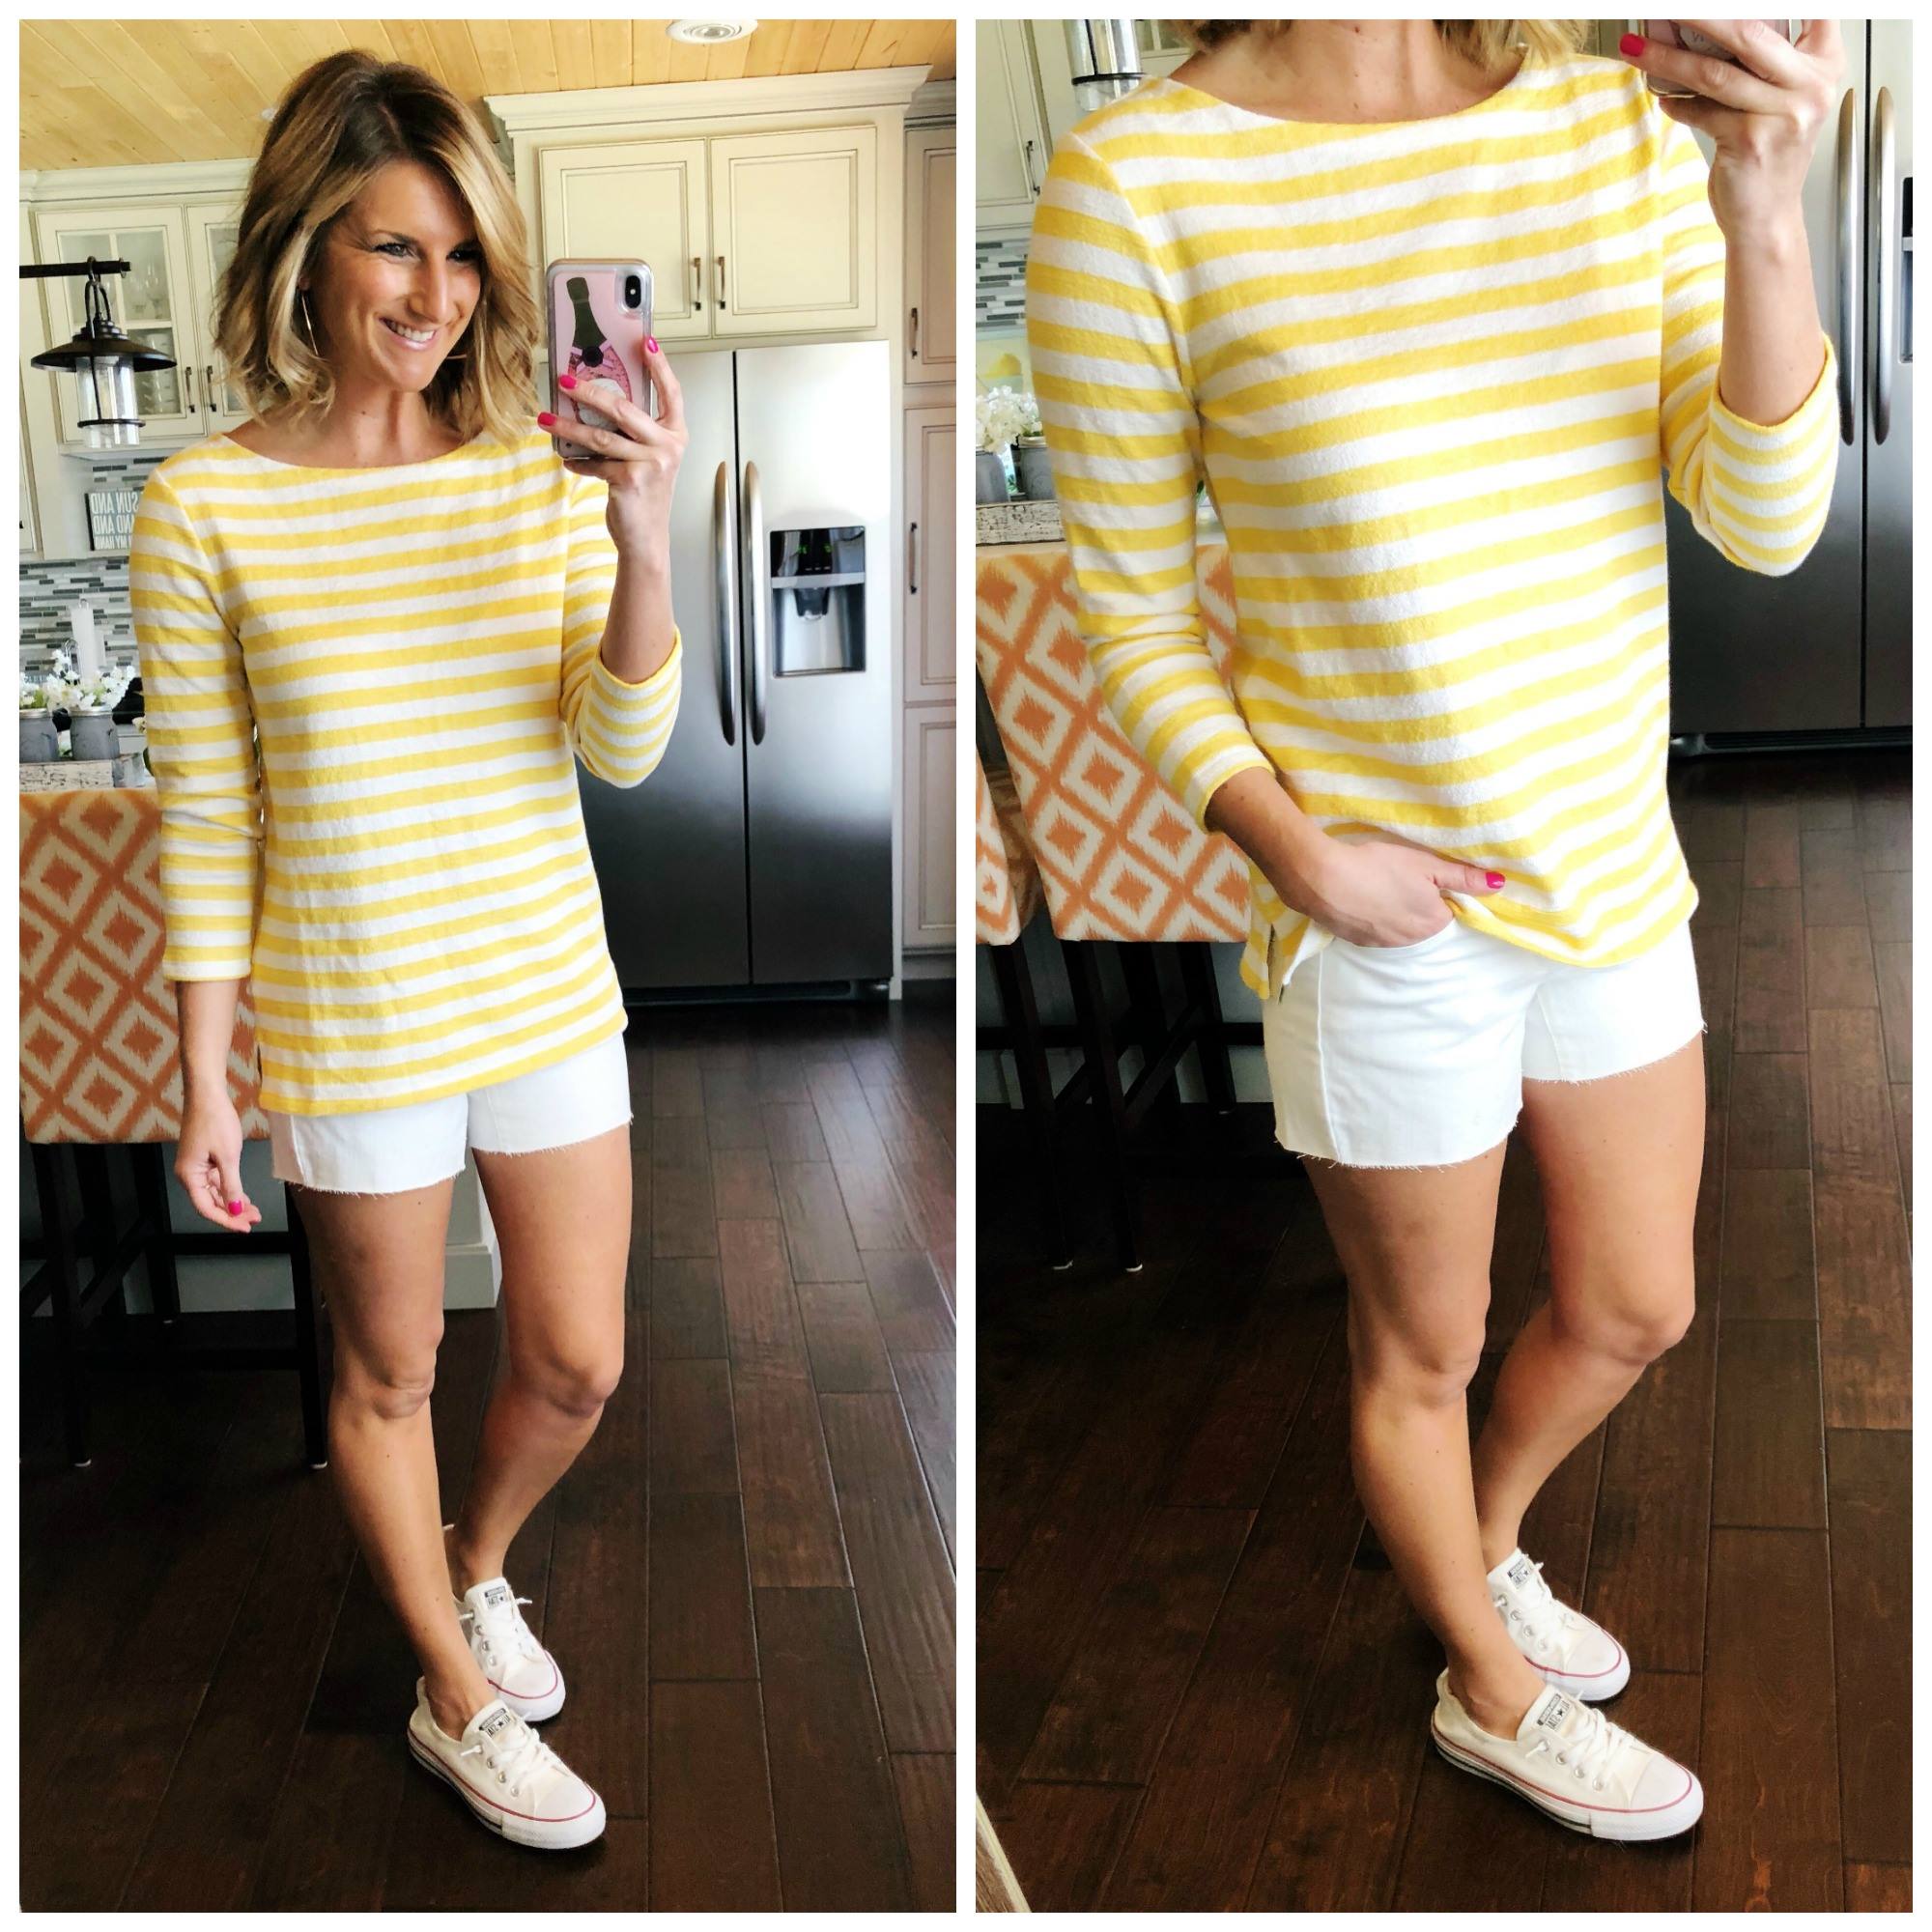 Summer Fashion // Striped Top + White Jean Shorts + Converse Shoreline Sneakers